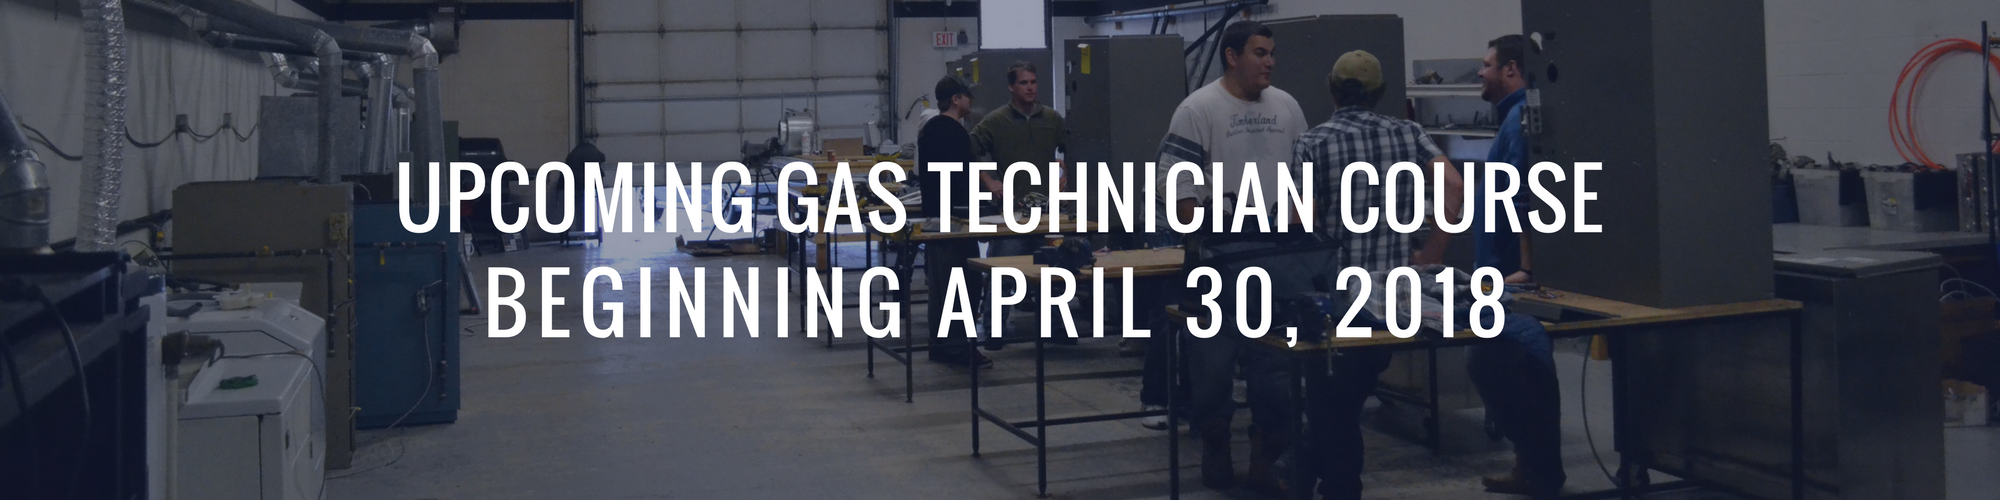 upcoming gas technician course beginning april 30